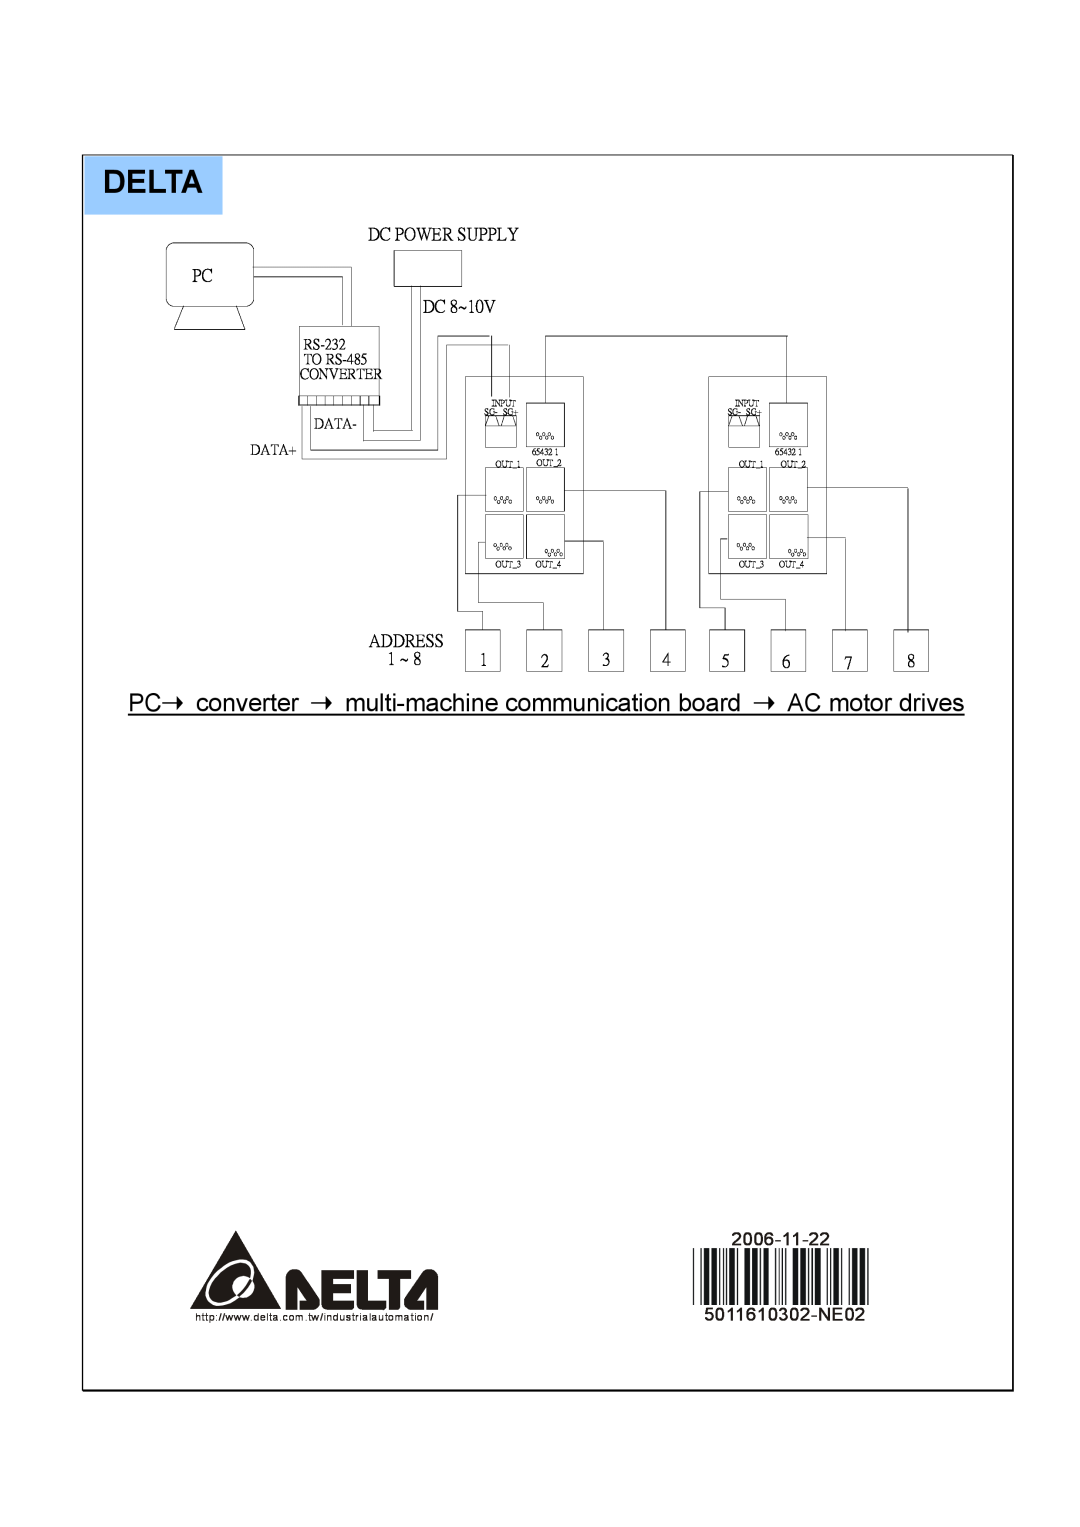 Delta Electronics RS-232 Delta, converter, multi-machinecommunication board, AC motor drives, 2006-11-22, 5011610302-NE02 